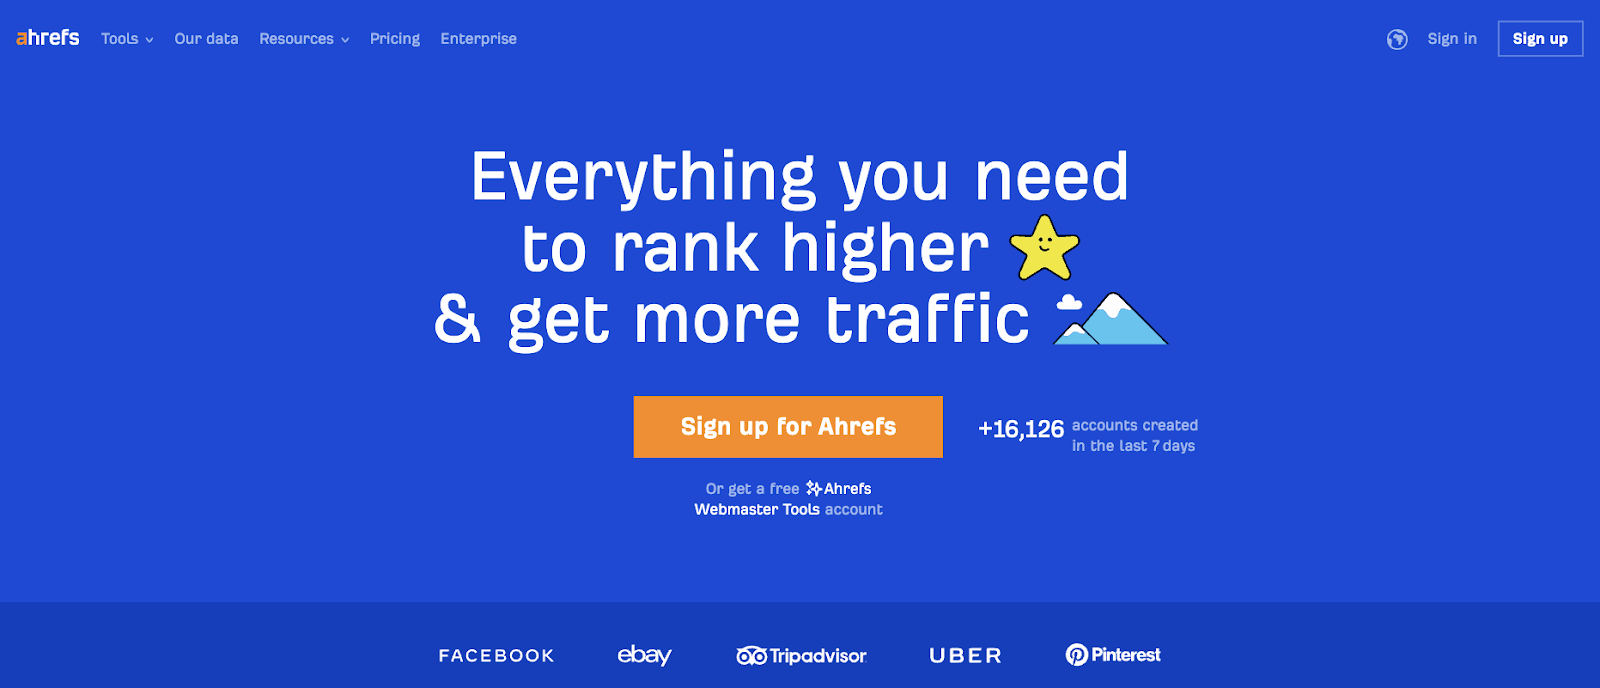 fiercepharma.com Traffic Analytics, Ranking Stats & Tech Stack